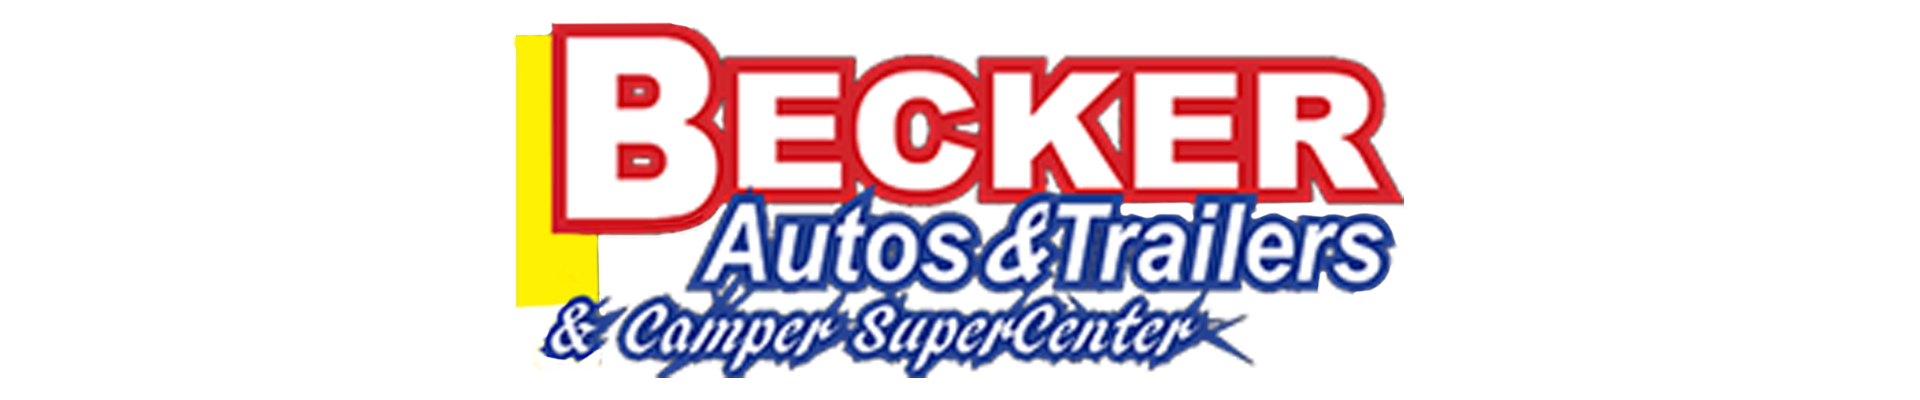 Becker Autos & Trailers